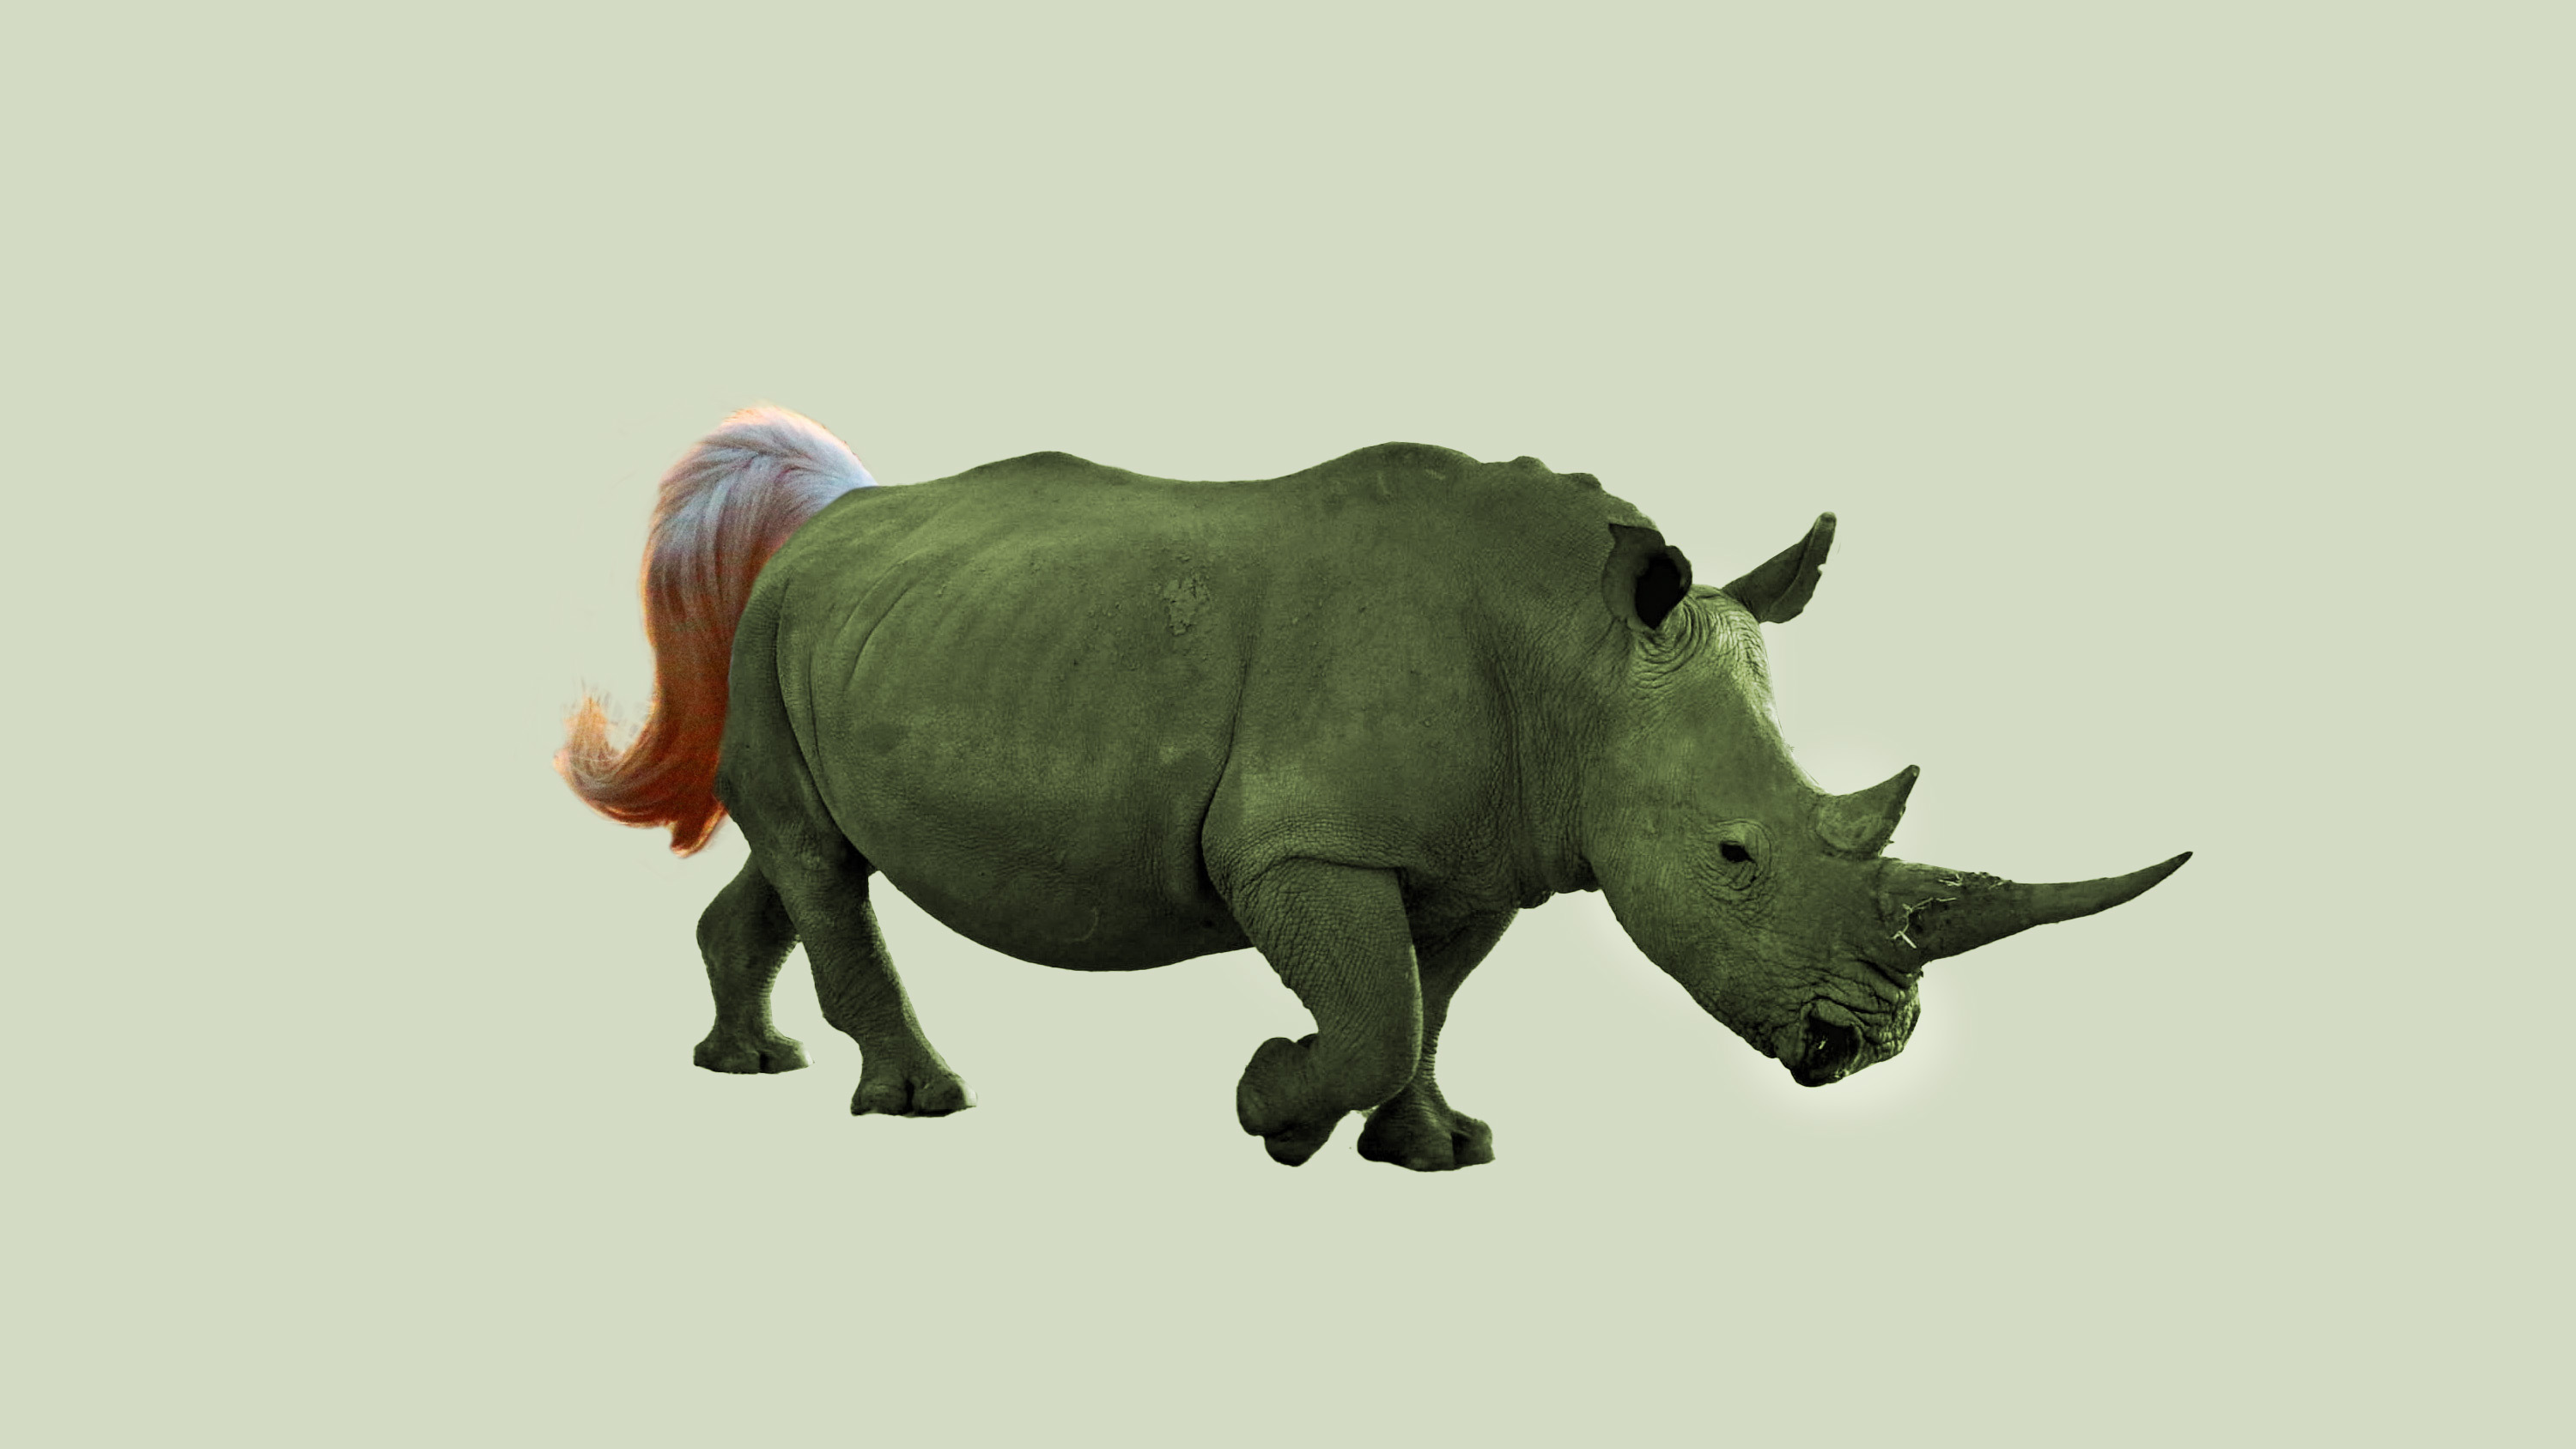 Rhinocorn, a cross between a rhino and unicorn